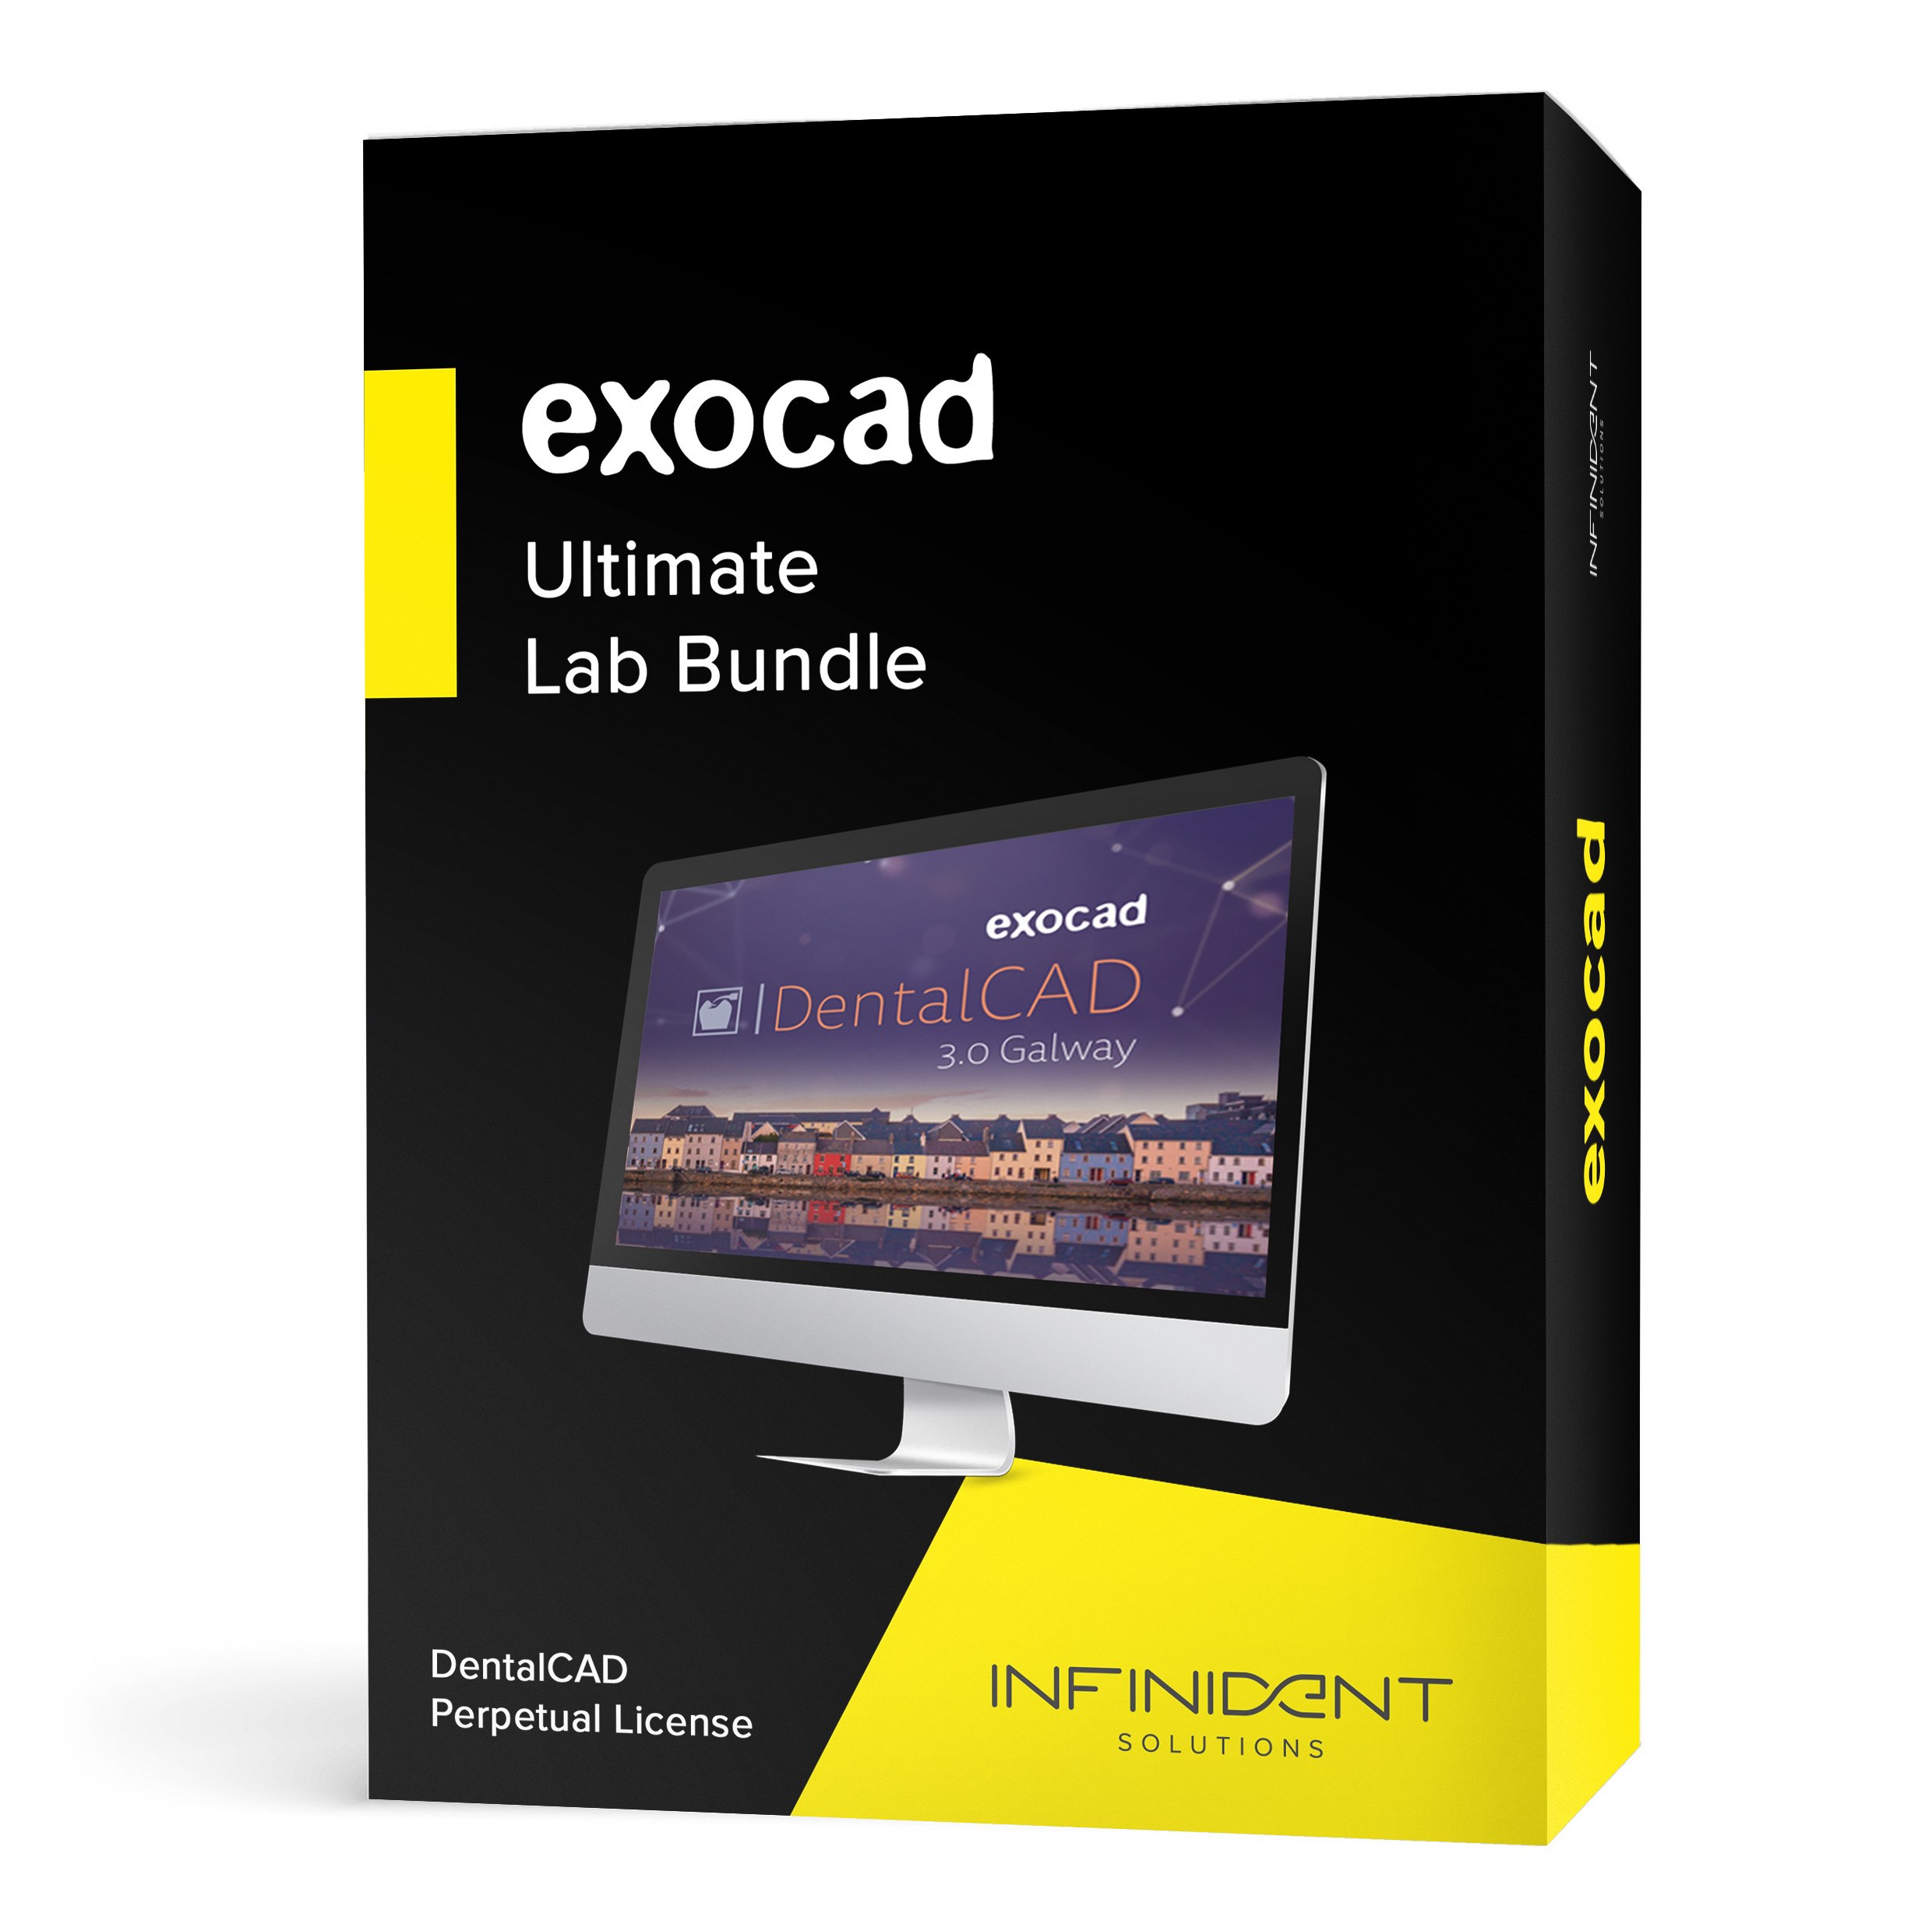 exocad Ultimate Lab Bundle